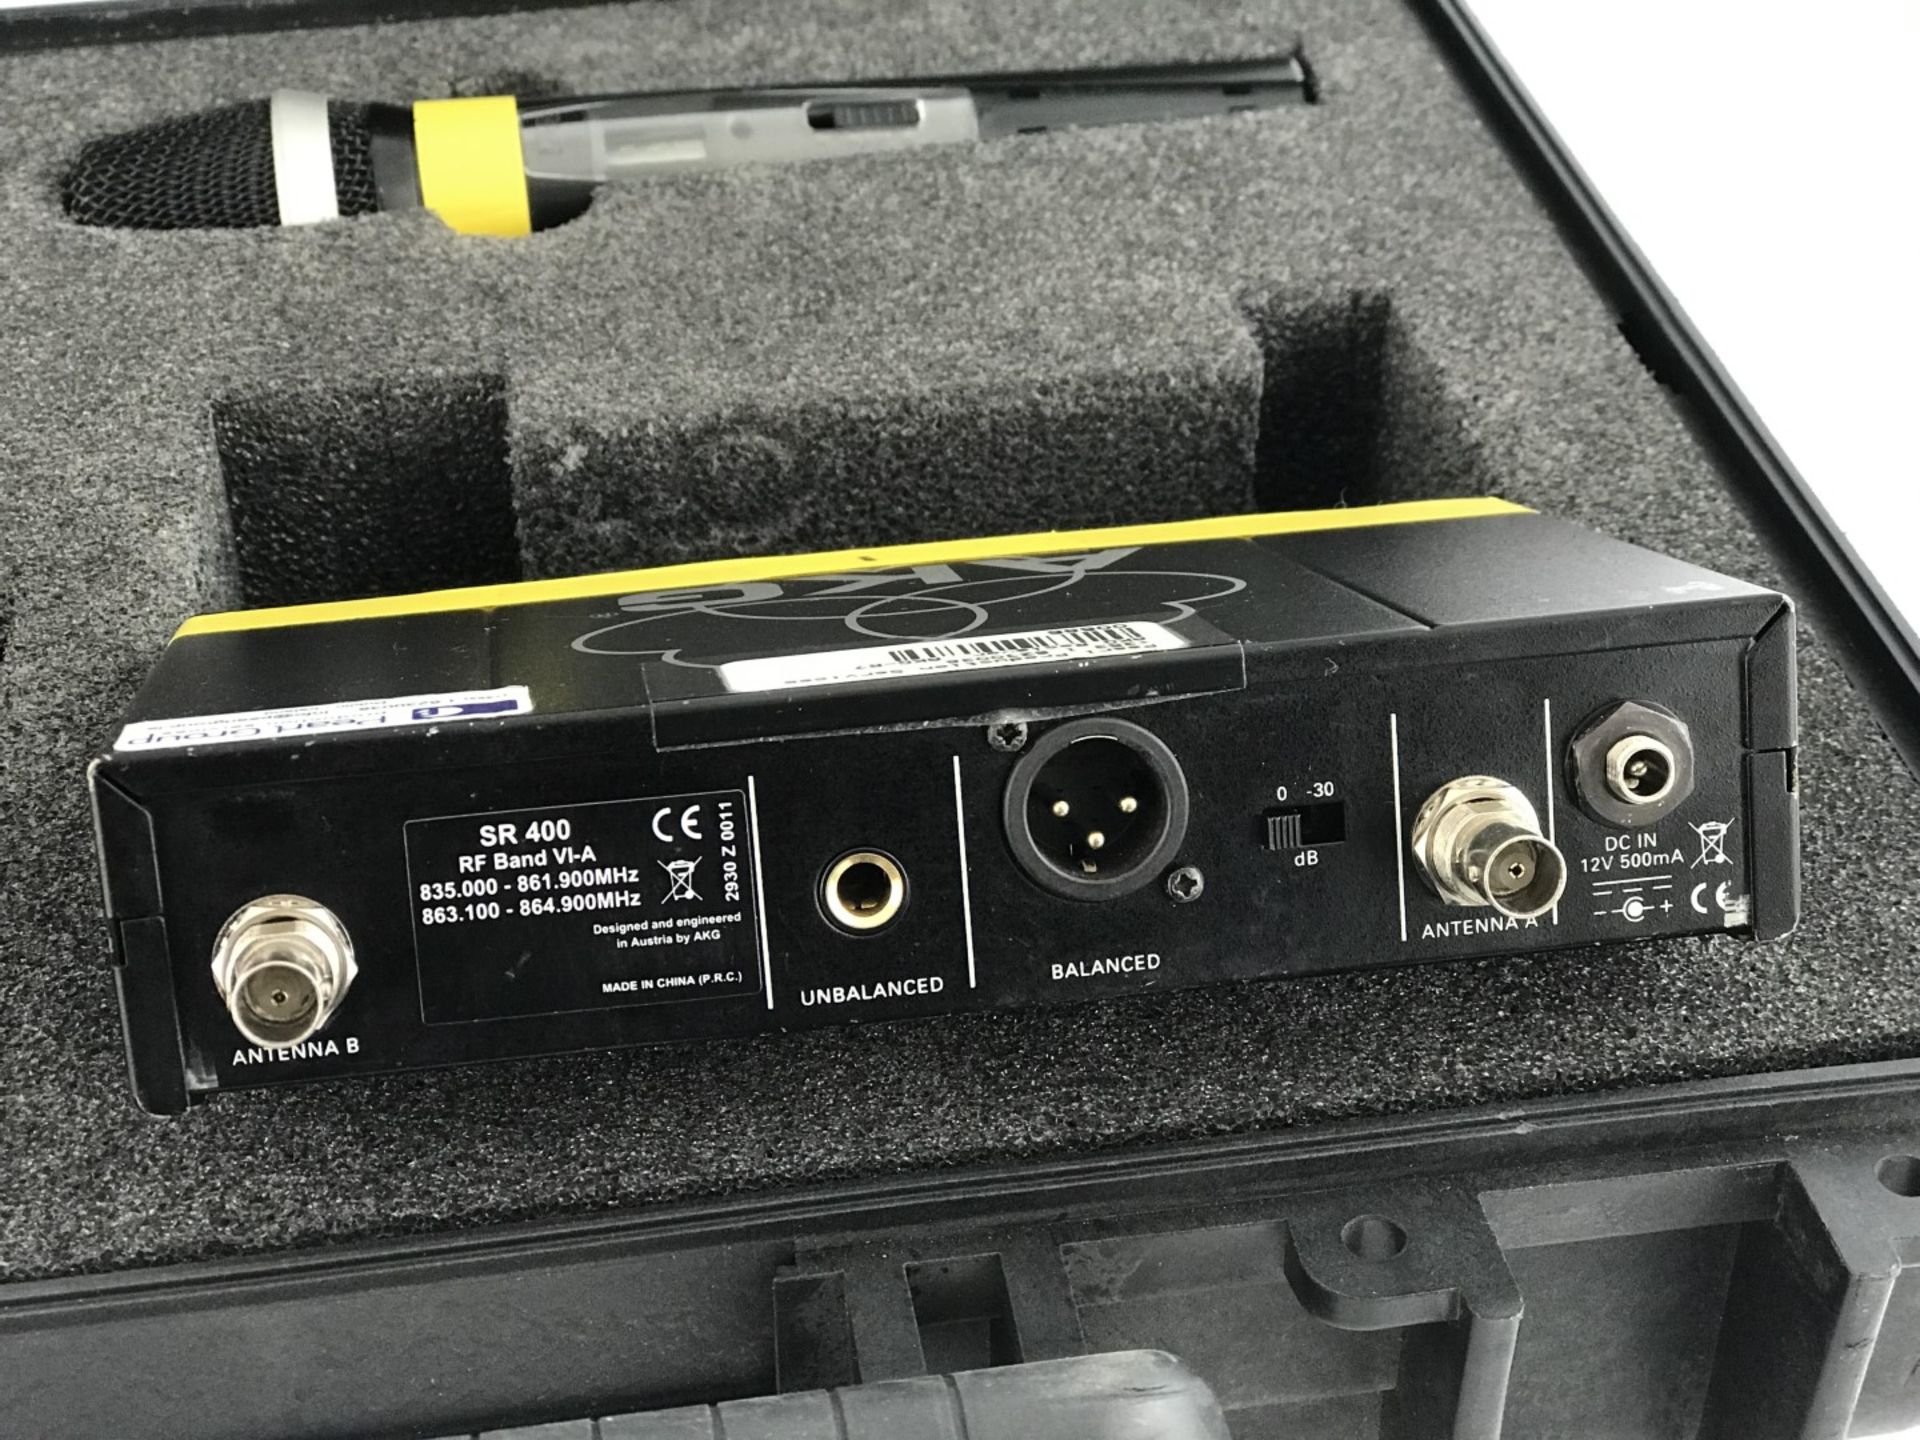 1 x AKG SR450 Lapel Radio Microphone & Receiver With Aerials & PSU In Hard Flight Case. - Ref: 5 - - Image 2 of 2